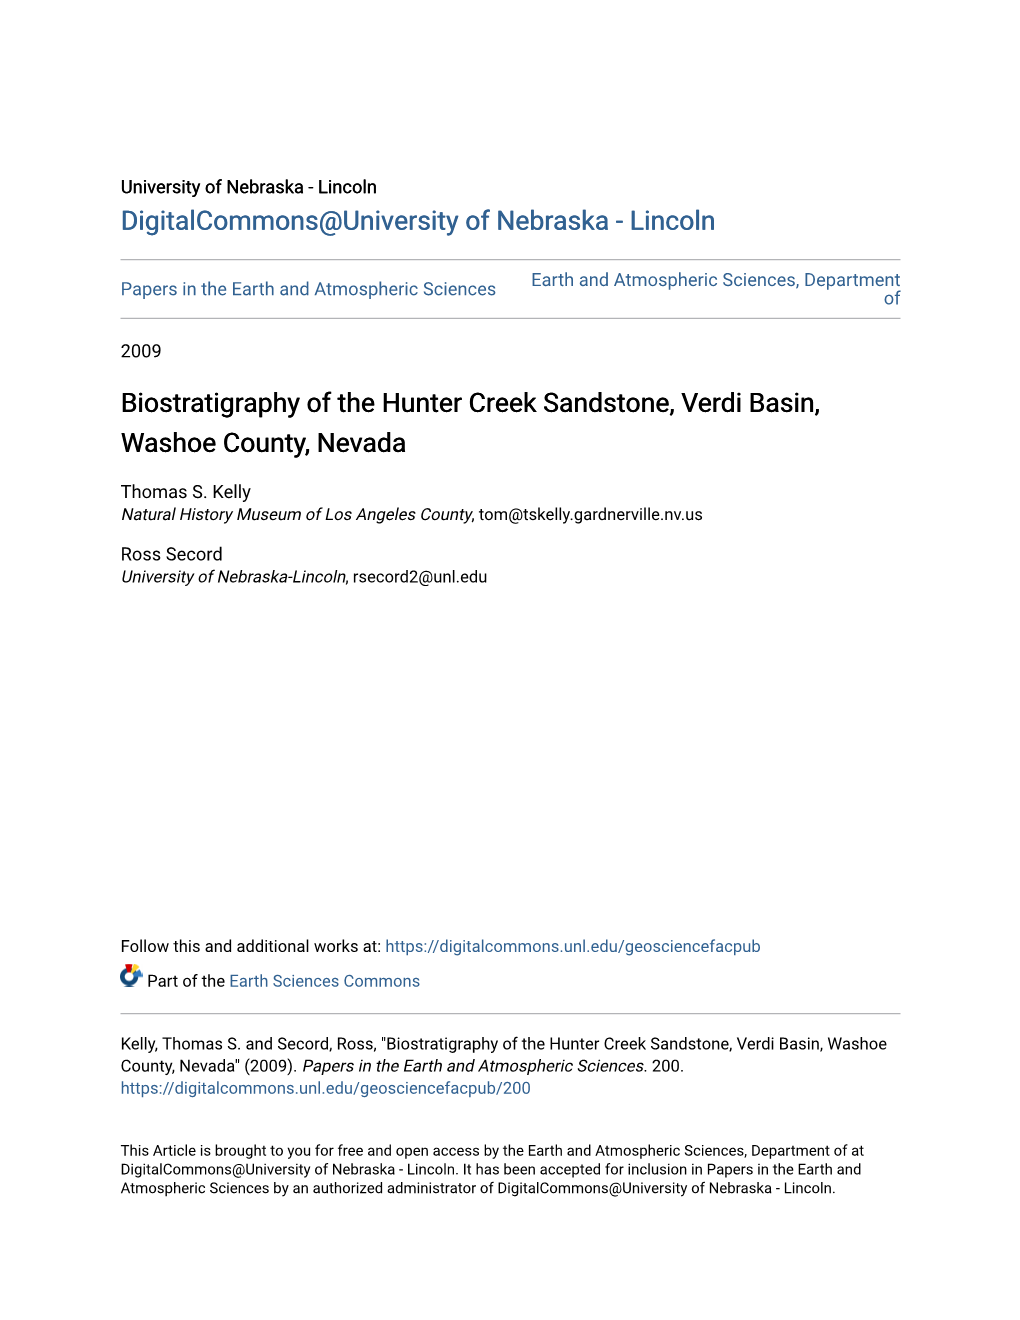 Biostratigraphy of the Hunter Creek Sandstone, Verdi Basin, Washoe County, Nevada